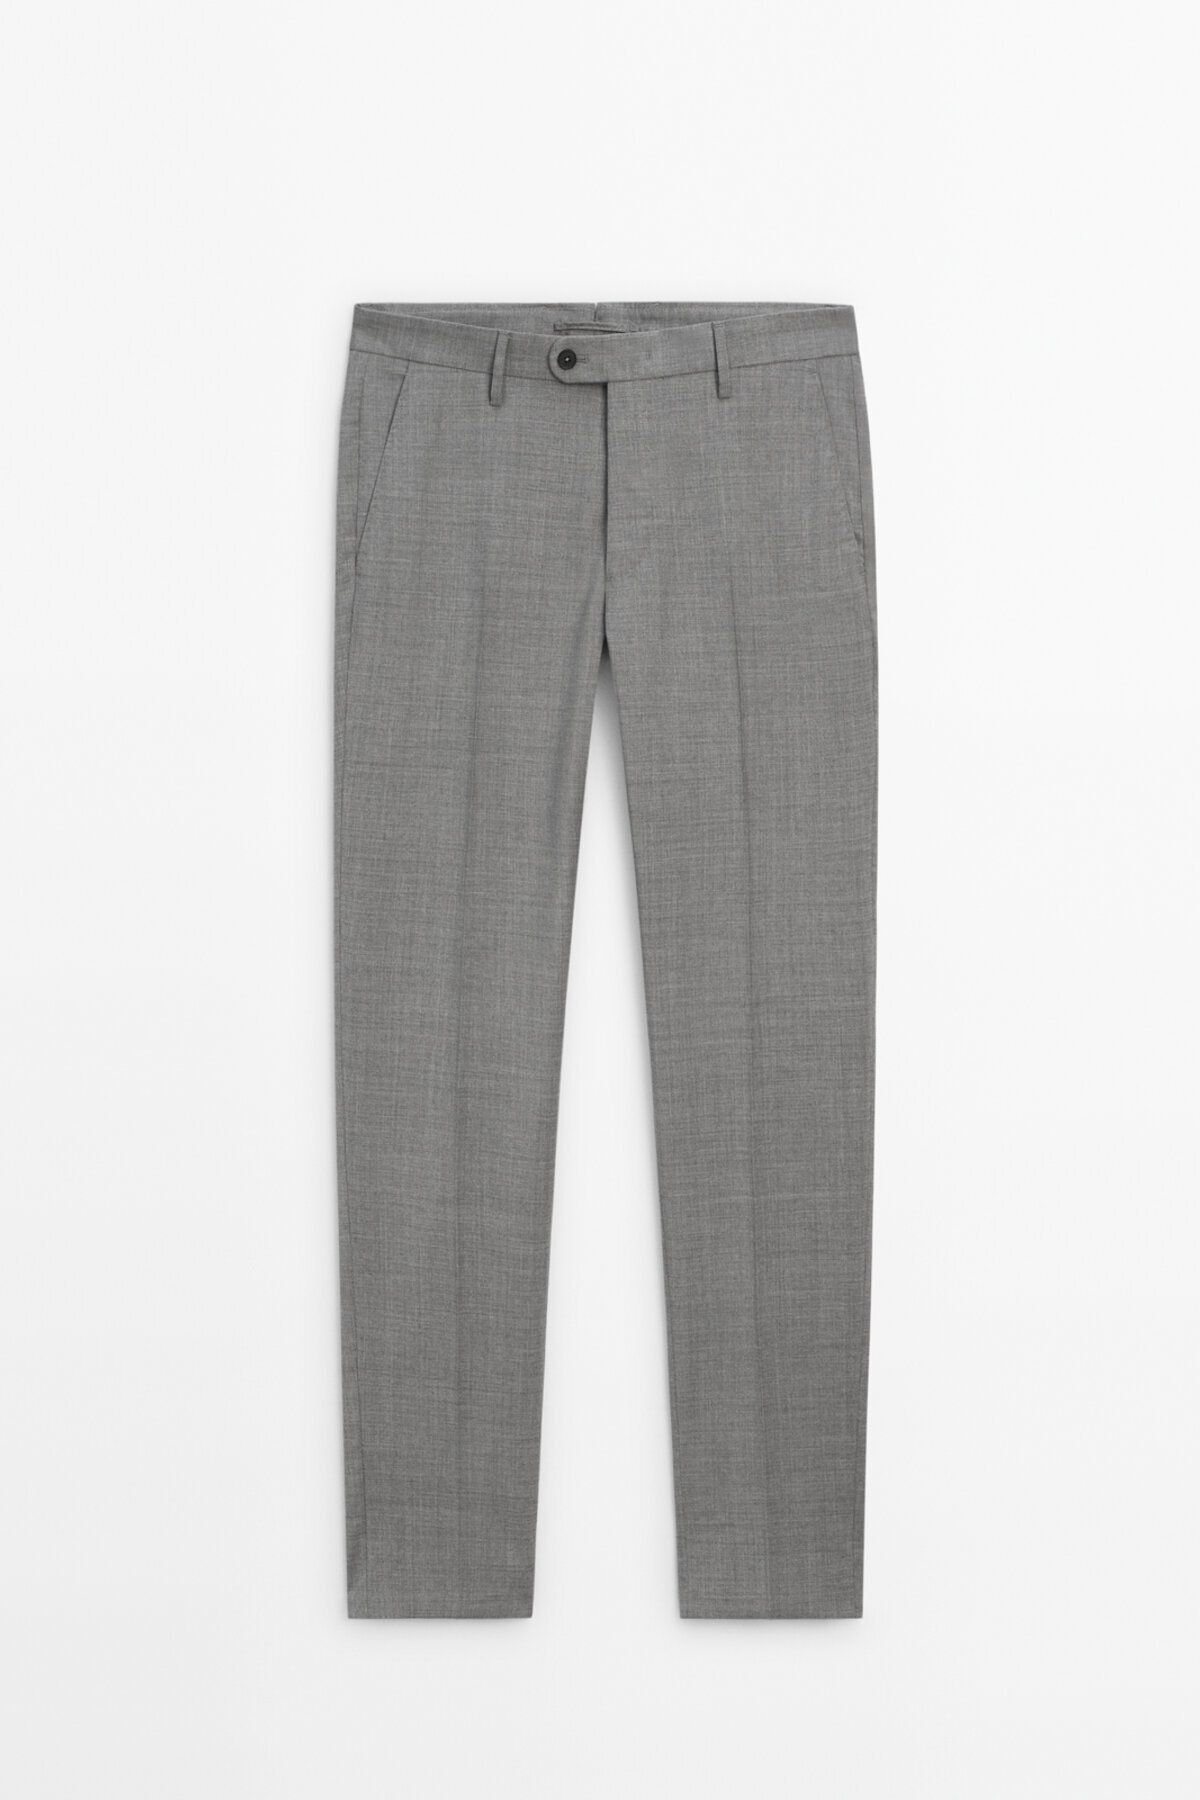 Massimo Dutti Gri %100 yün klasik pantolon